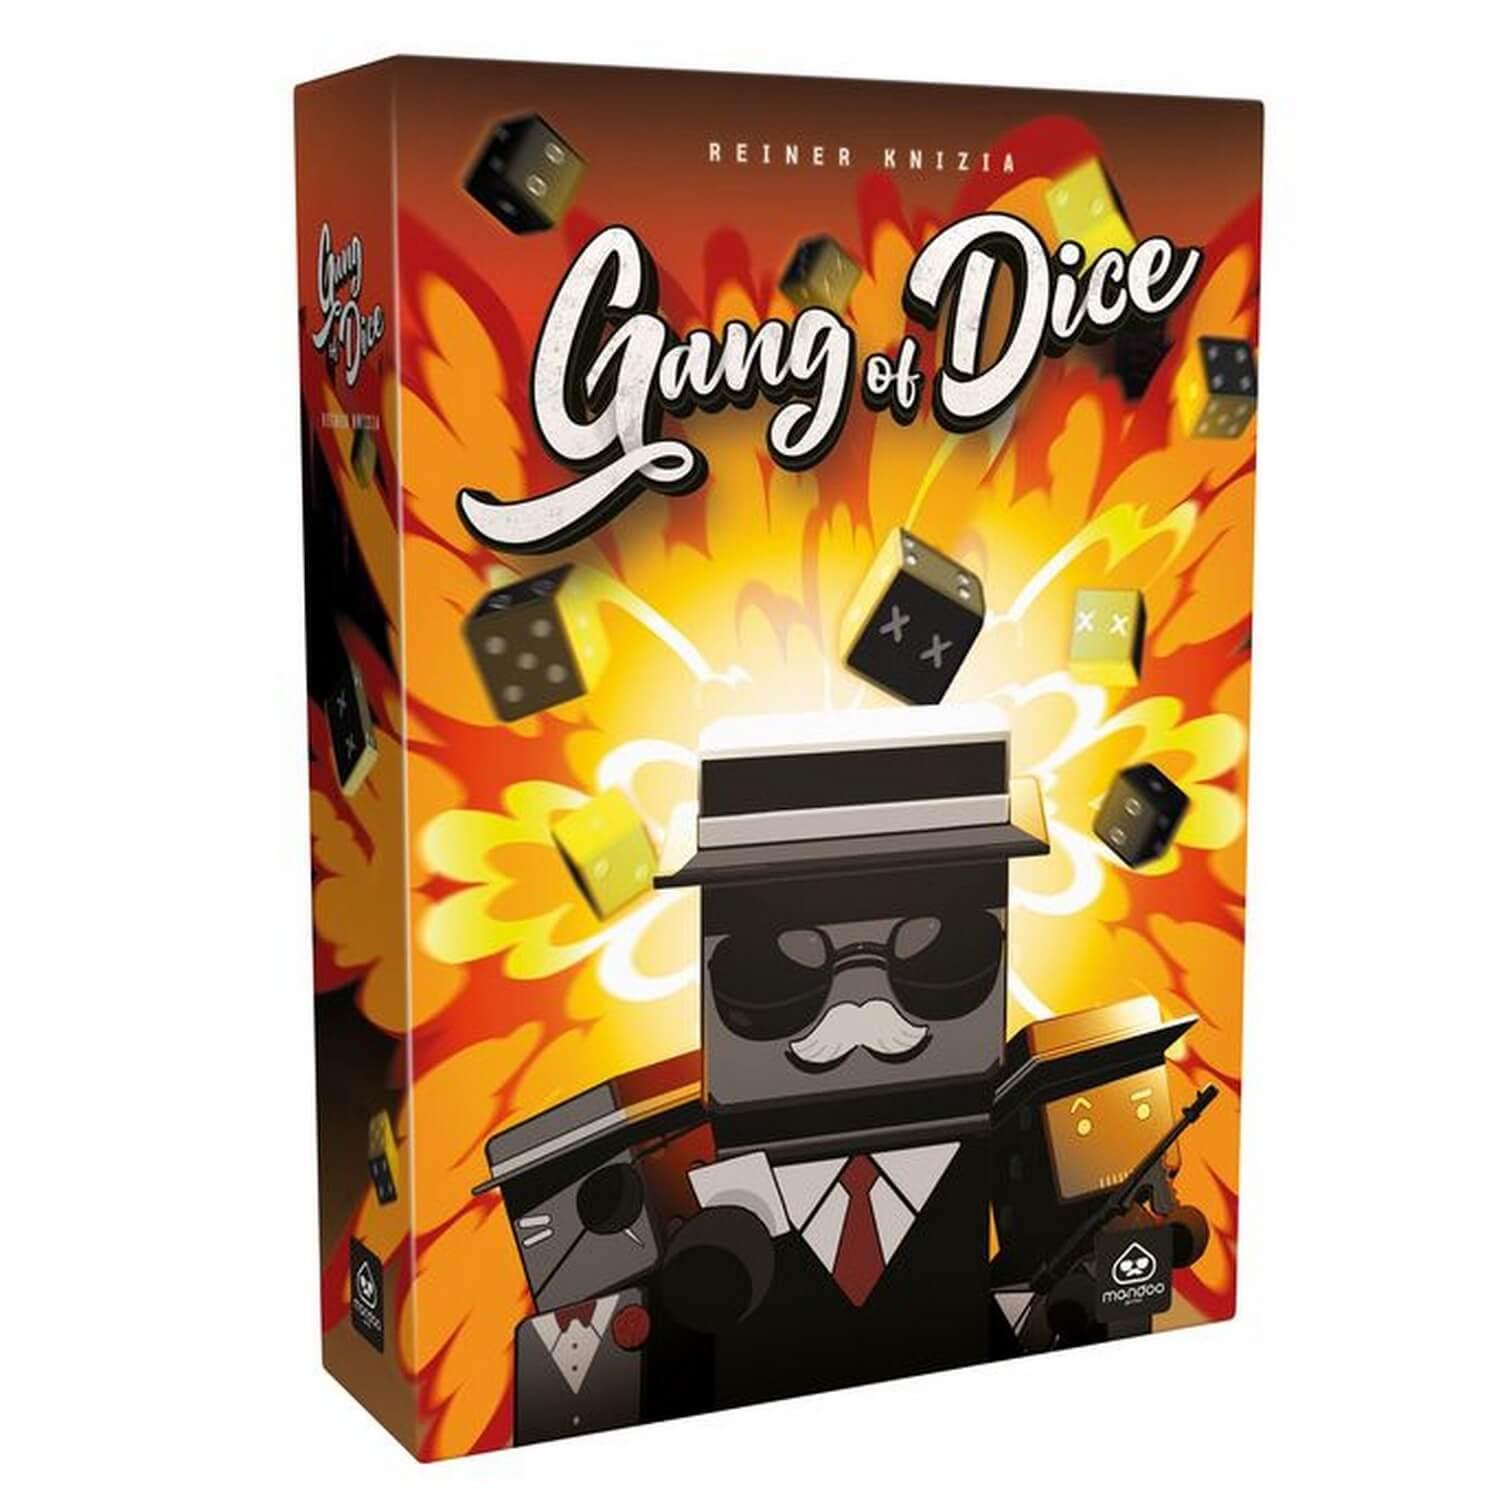 Gang of dice